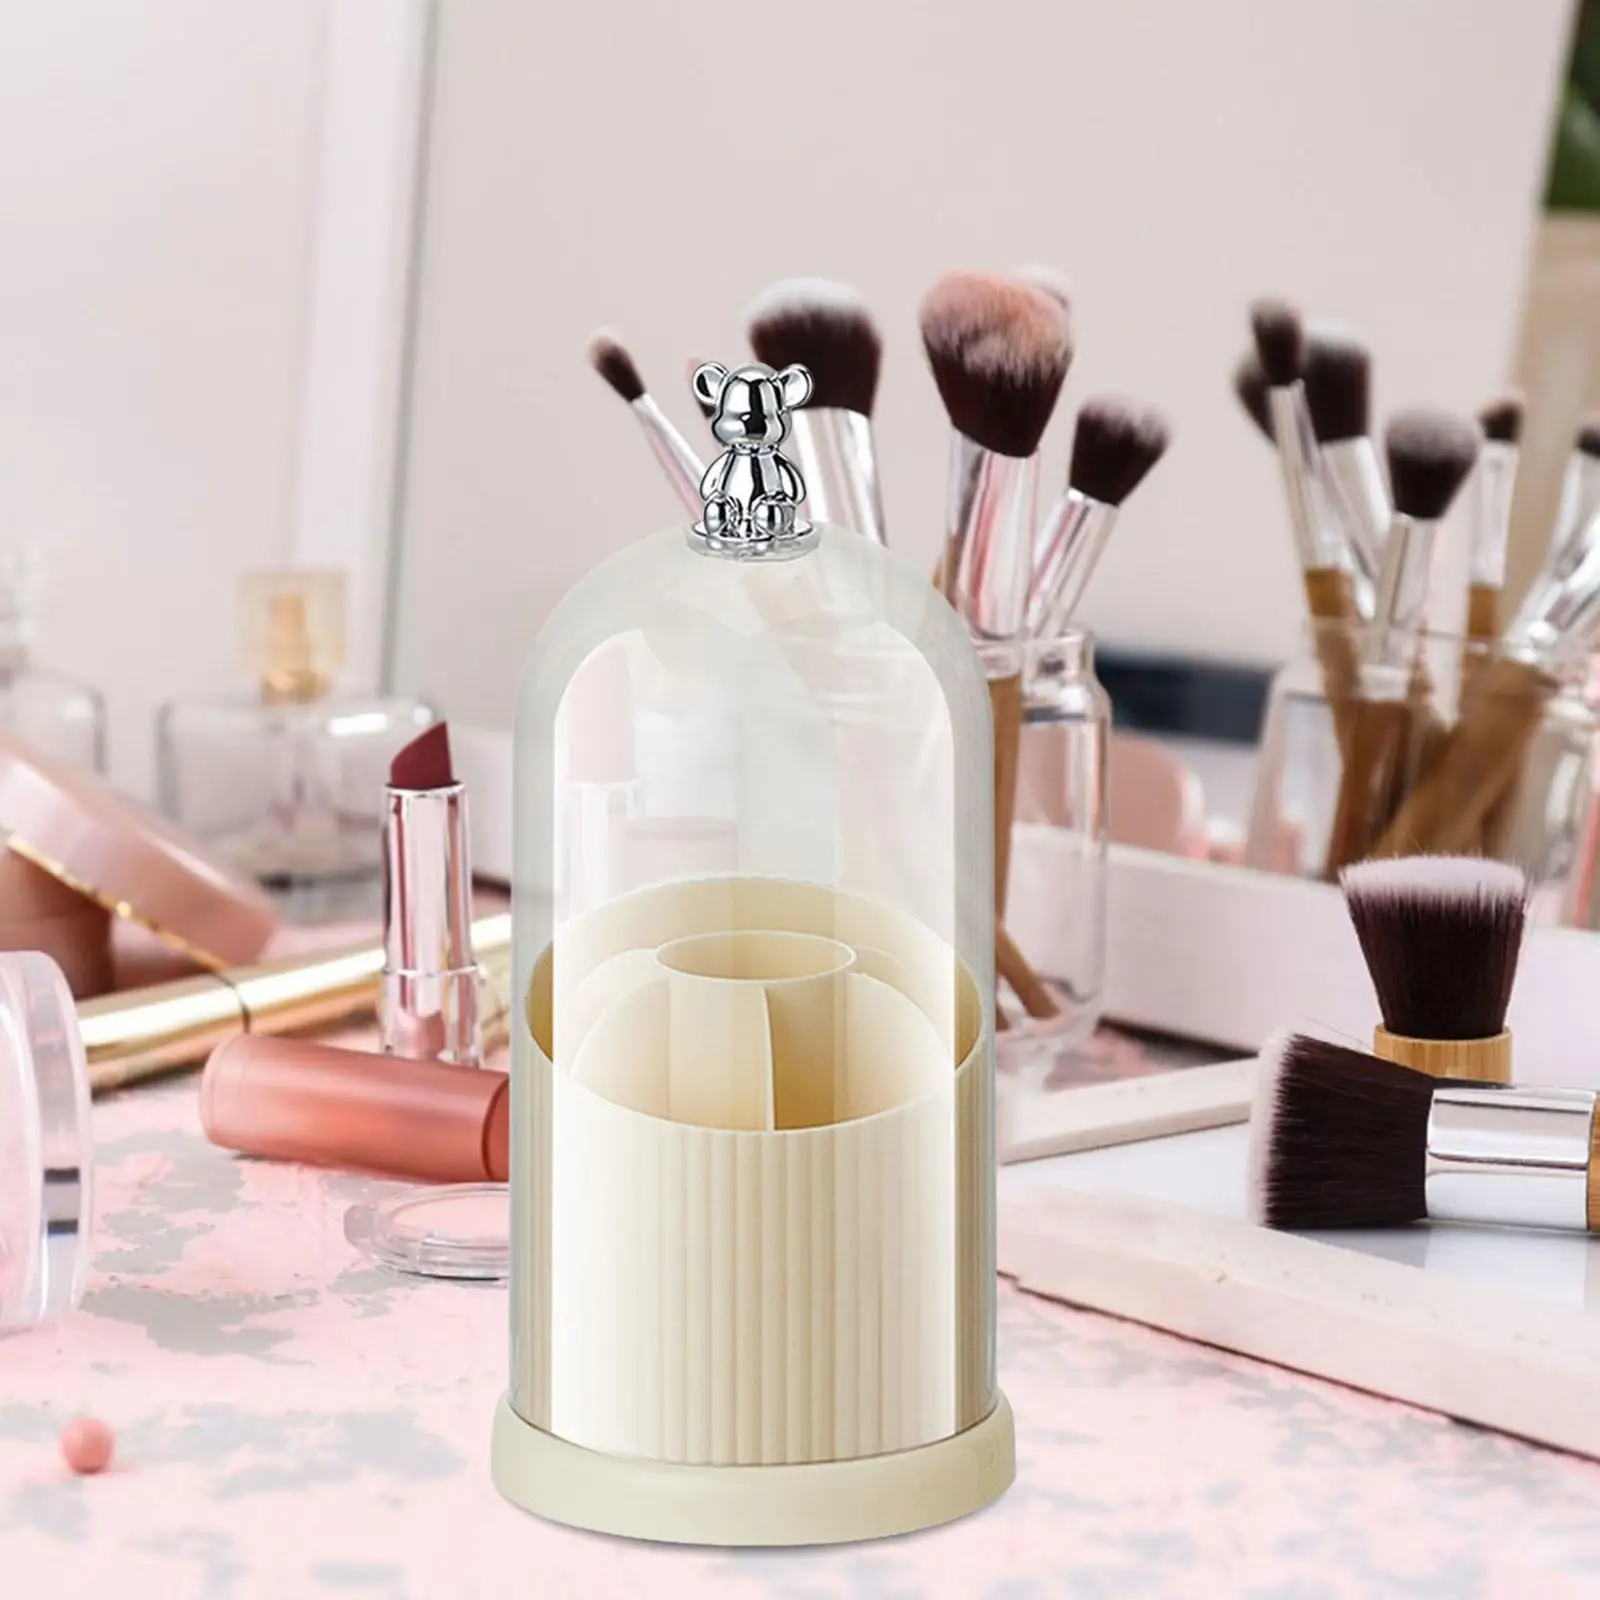 Makeup Brush Holder with Lid Desk Organizer Cosmetics Brushes Storage Container for Home Desktop Countertop Bathroom Vanity